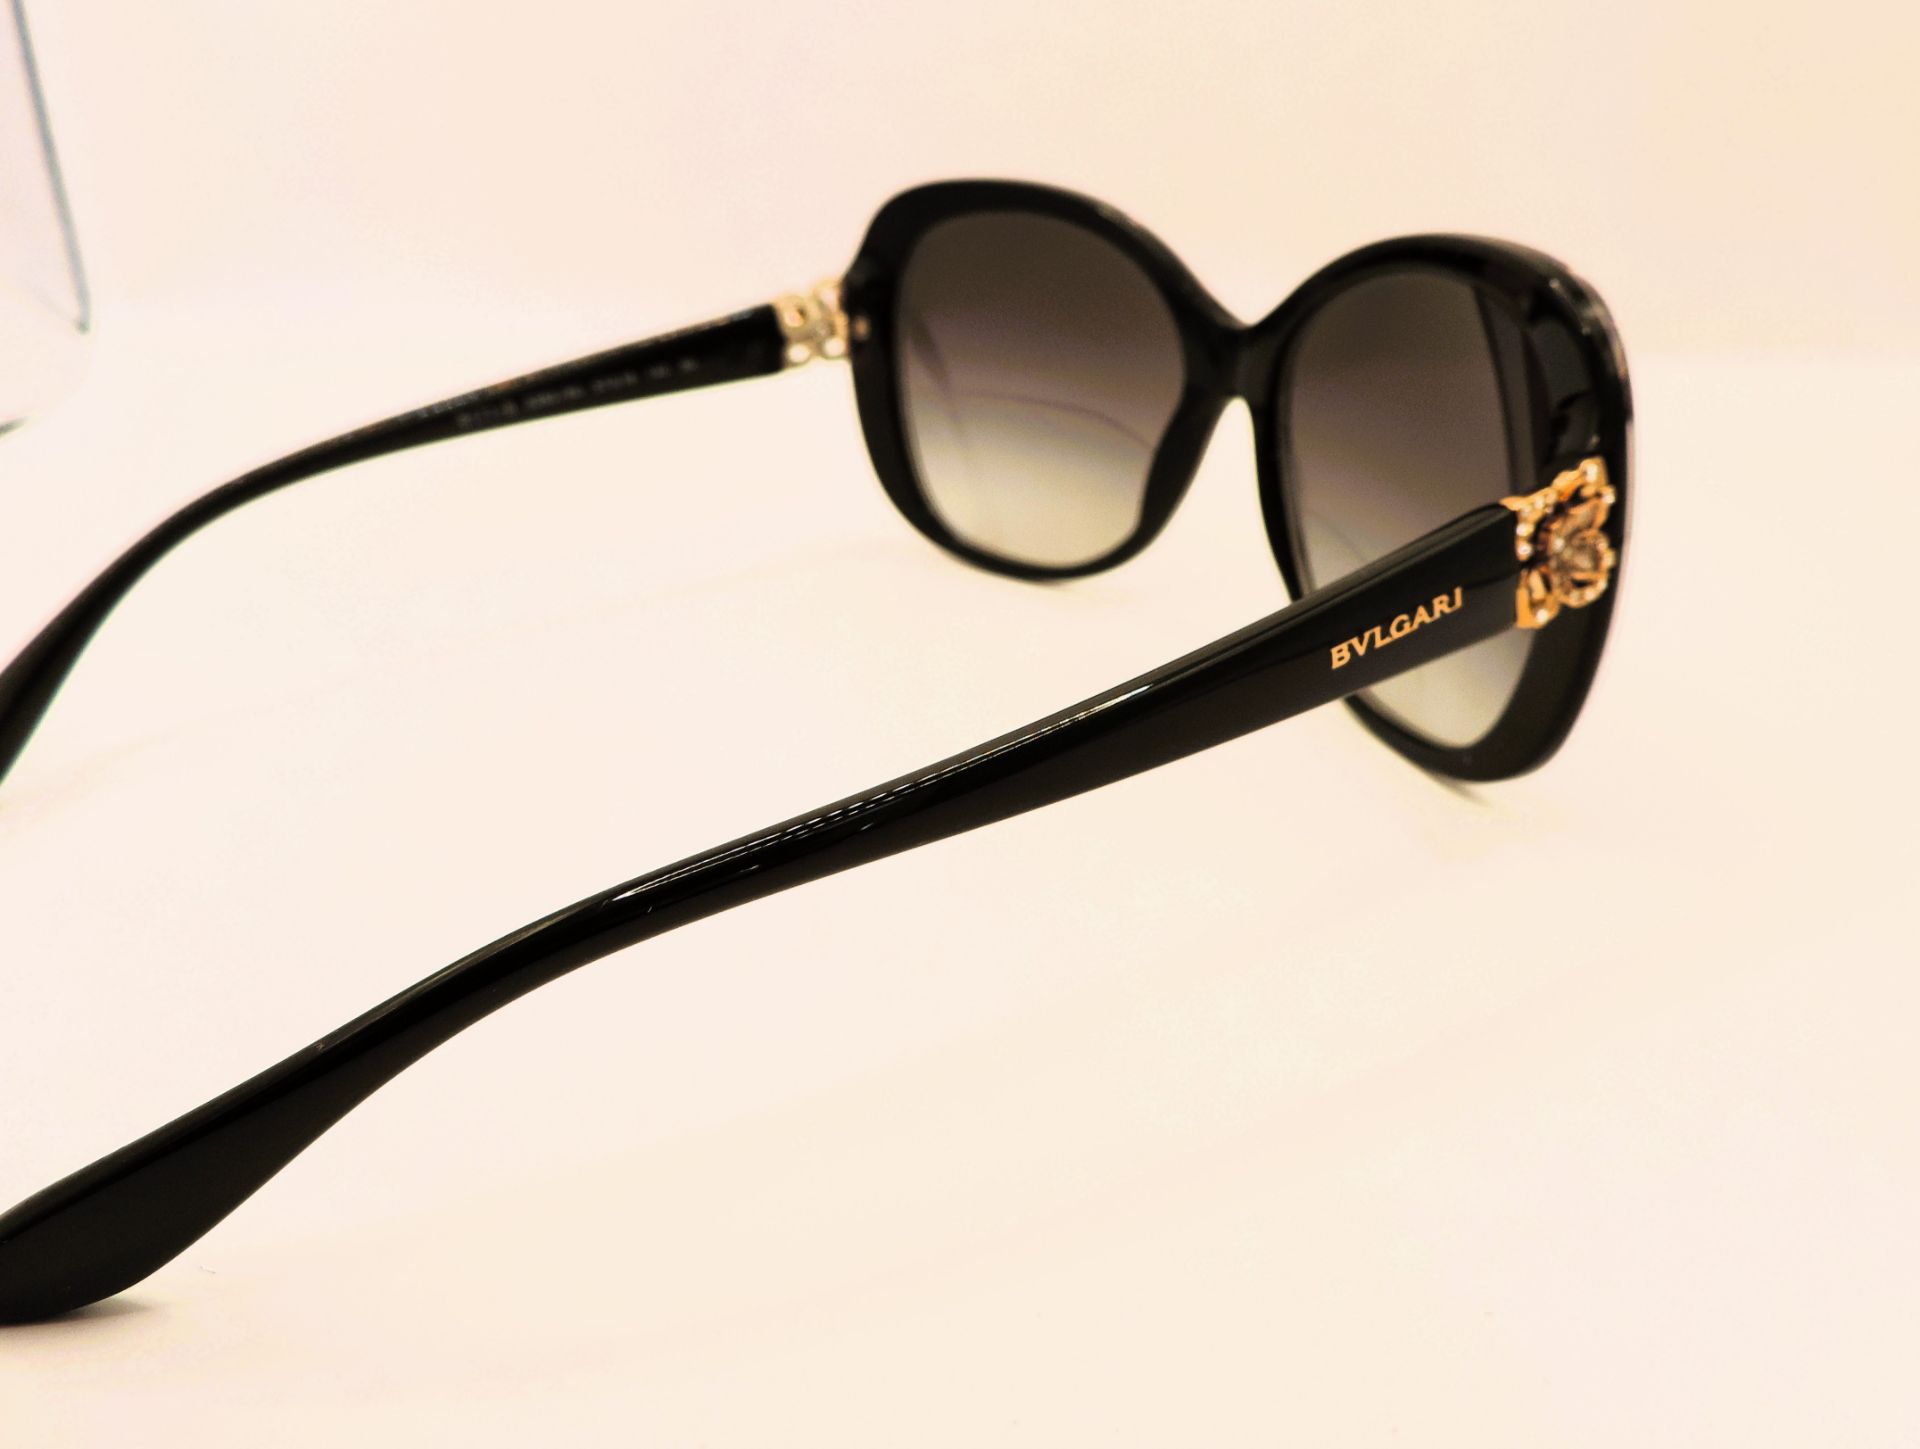 BVLGARI Black Sunglasses 8171-C Jewelled Hinged Detail New With Box & Certificate - Image 12 of 17